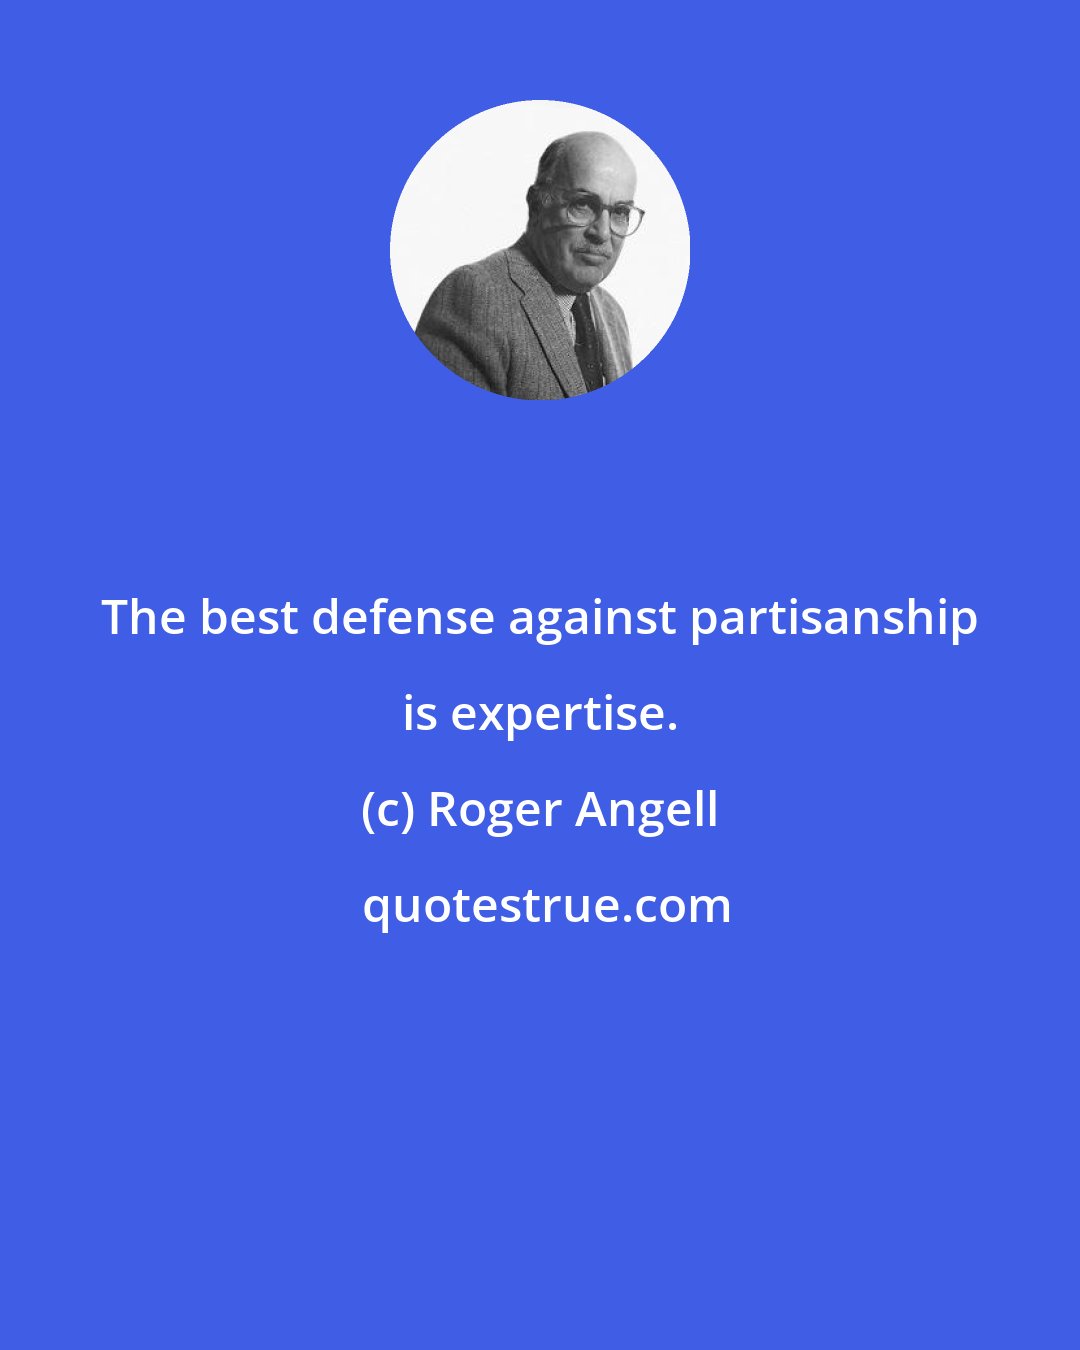 Roger Angell: The best defense against partisanship is expertise.